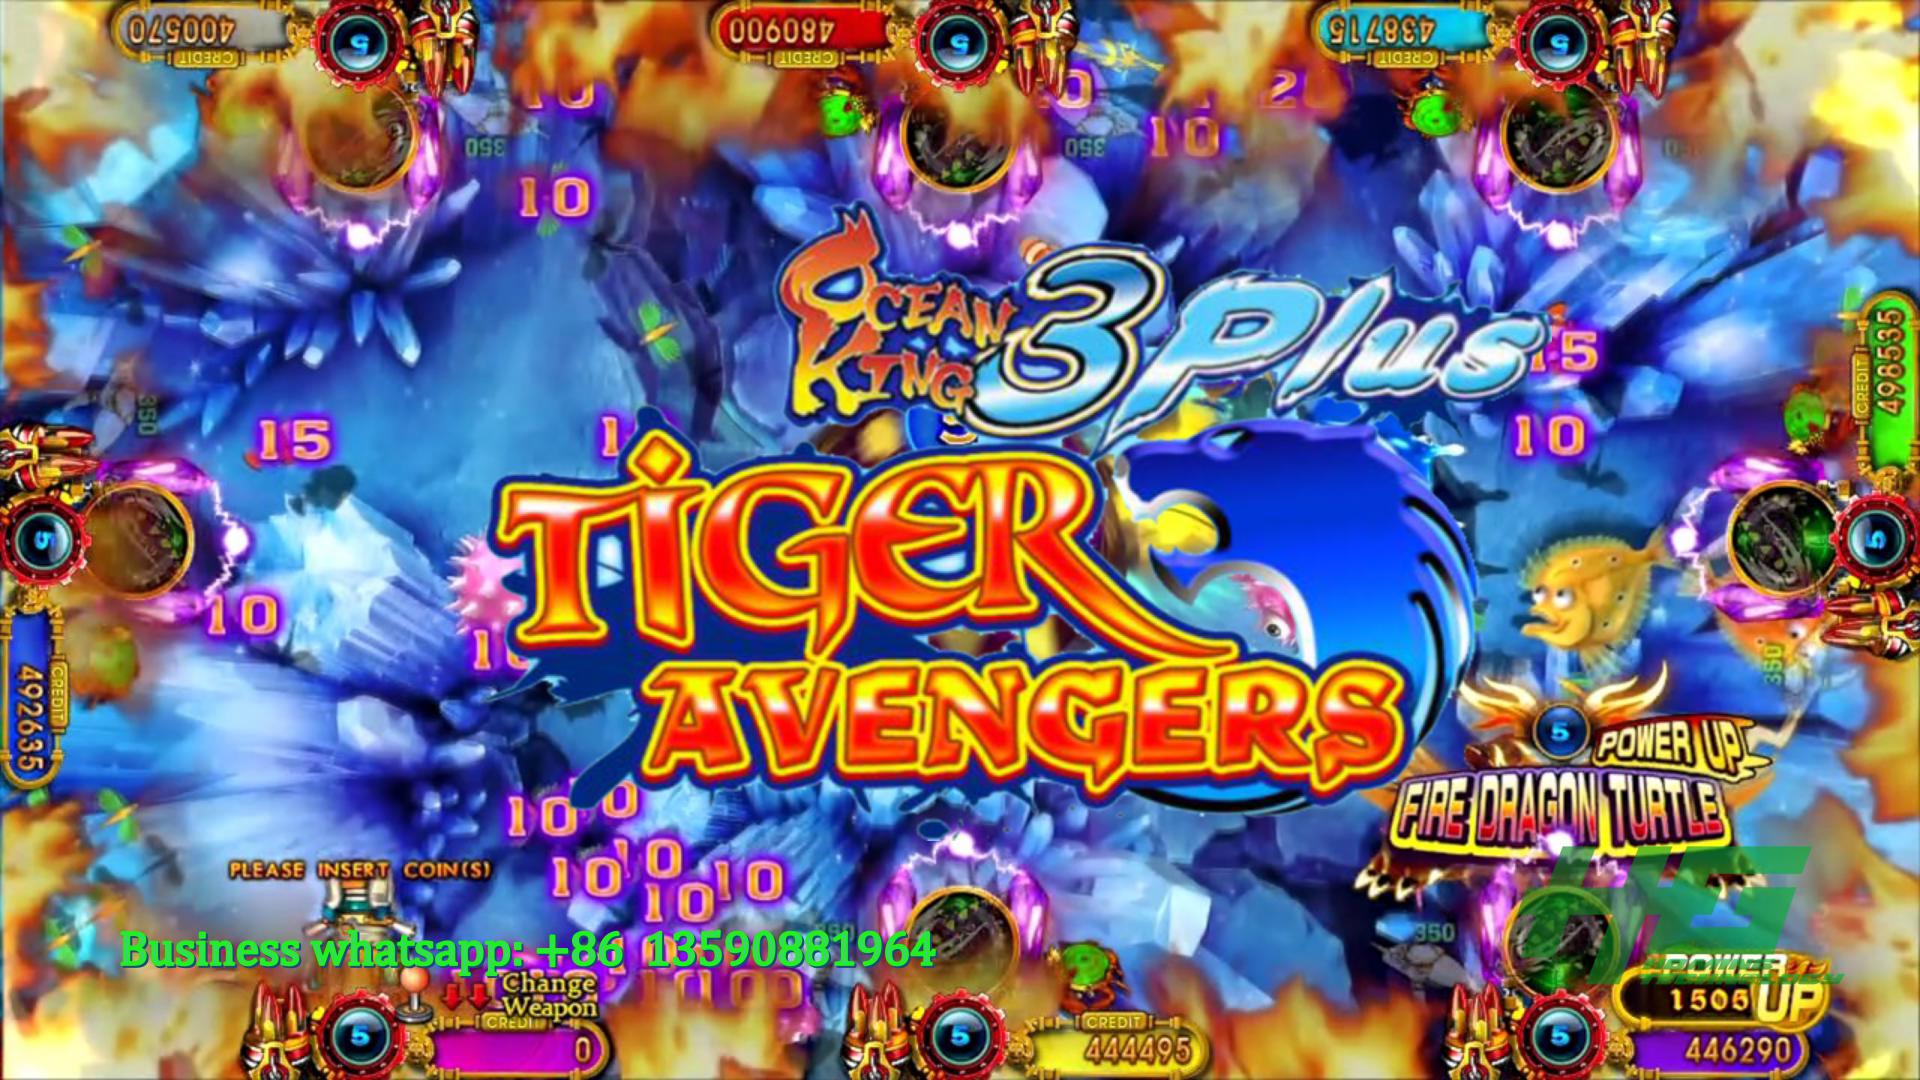 IGS Original Ocean King 3 Plus Tiger Avengers,Ocean King 3 Plus Fish Casino Game Machine For Sale 